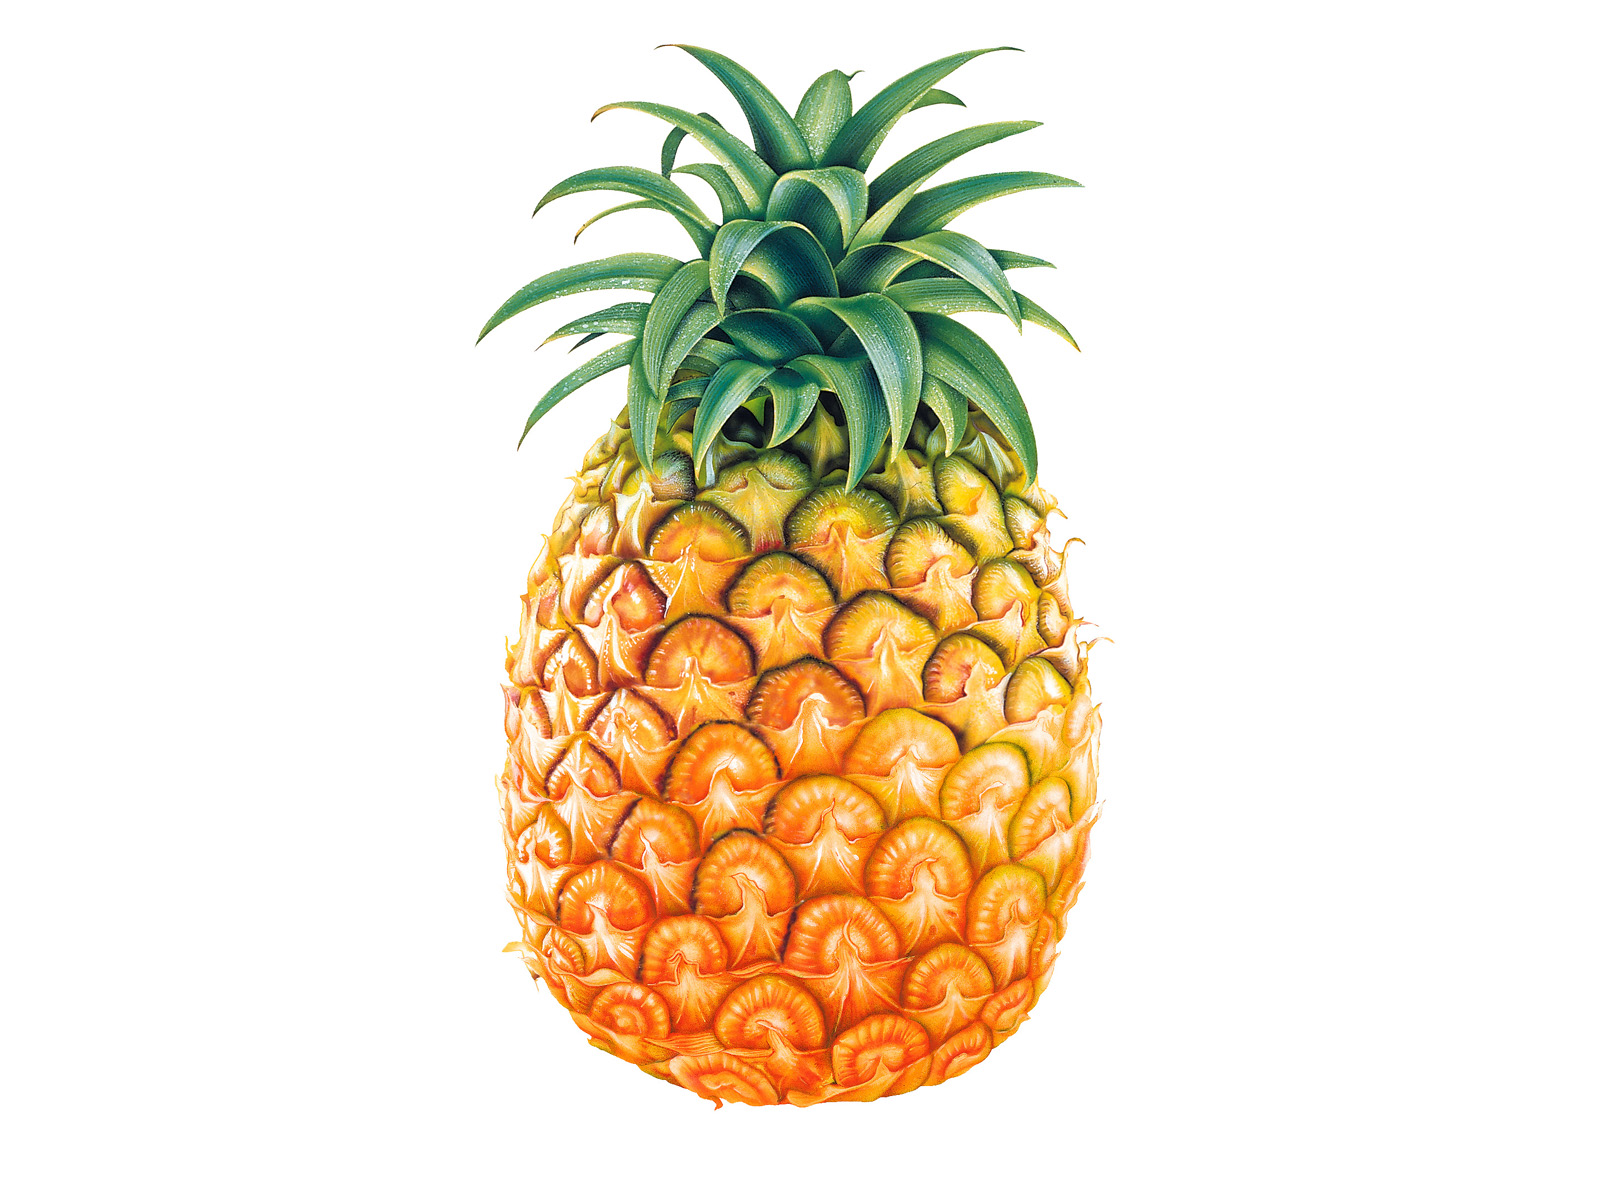 Pineapple Wallpapers for Desktop Background in HD